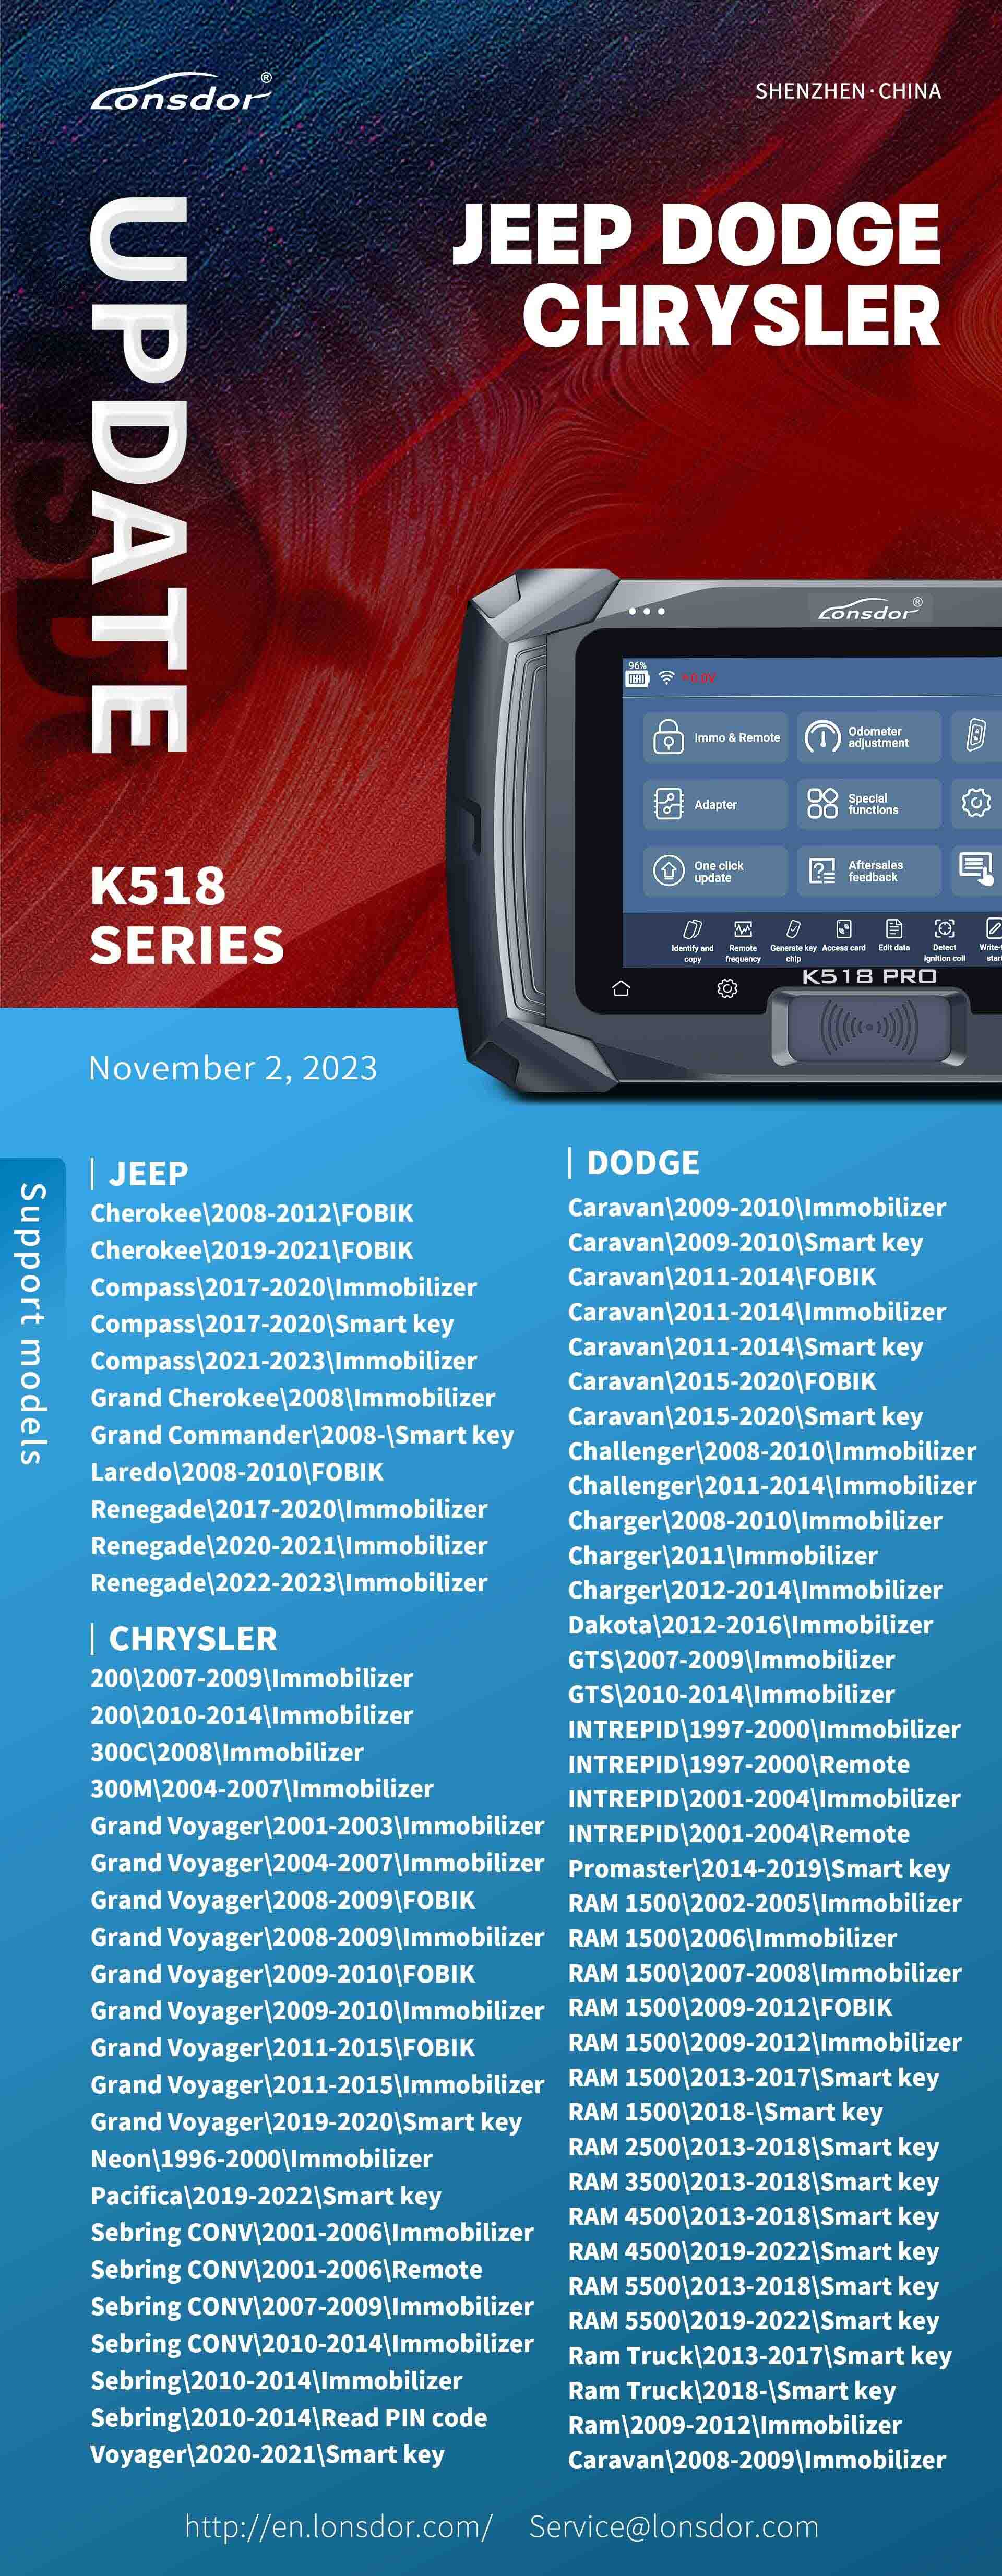 K518 New Update on JEEP DODGE CHRYSLER